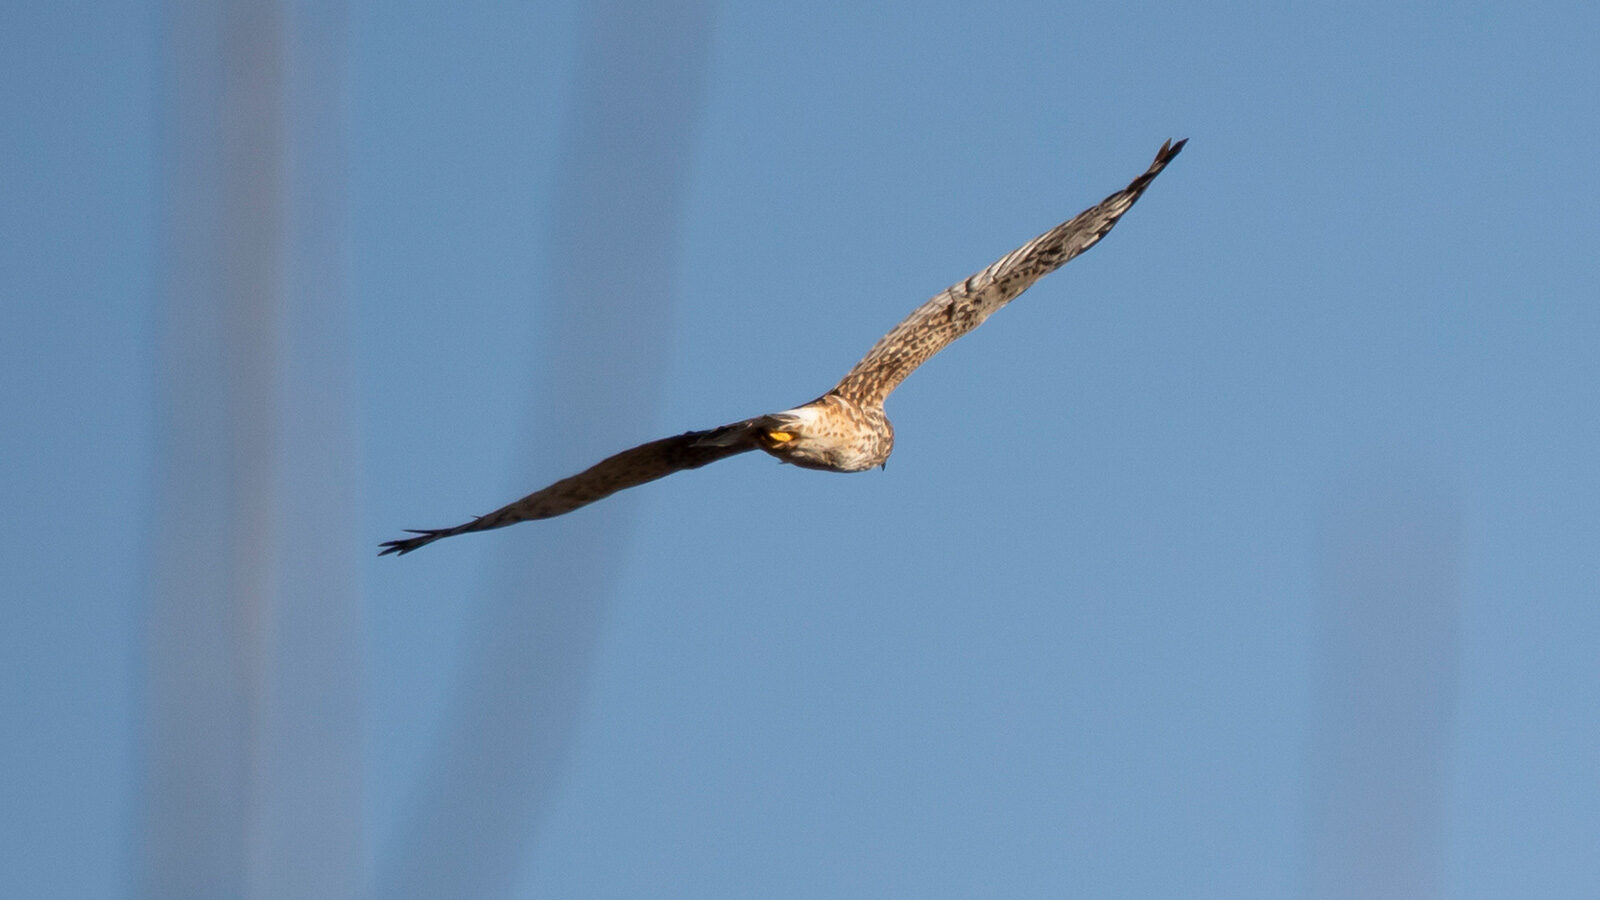 Northern harrier flying through blue sky